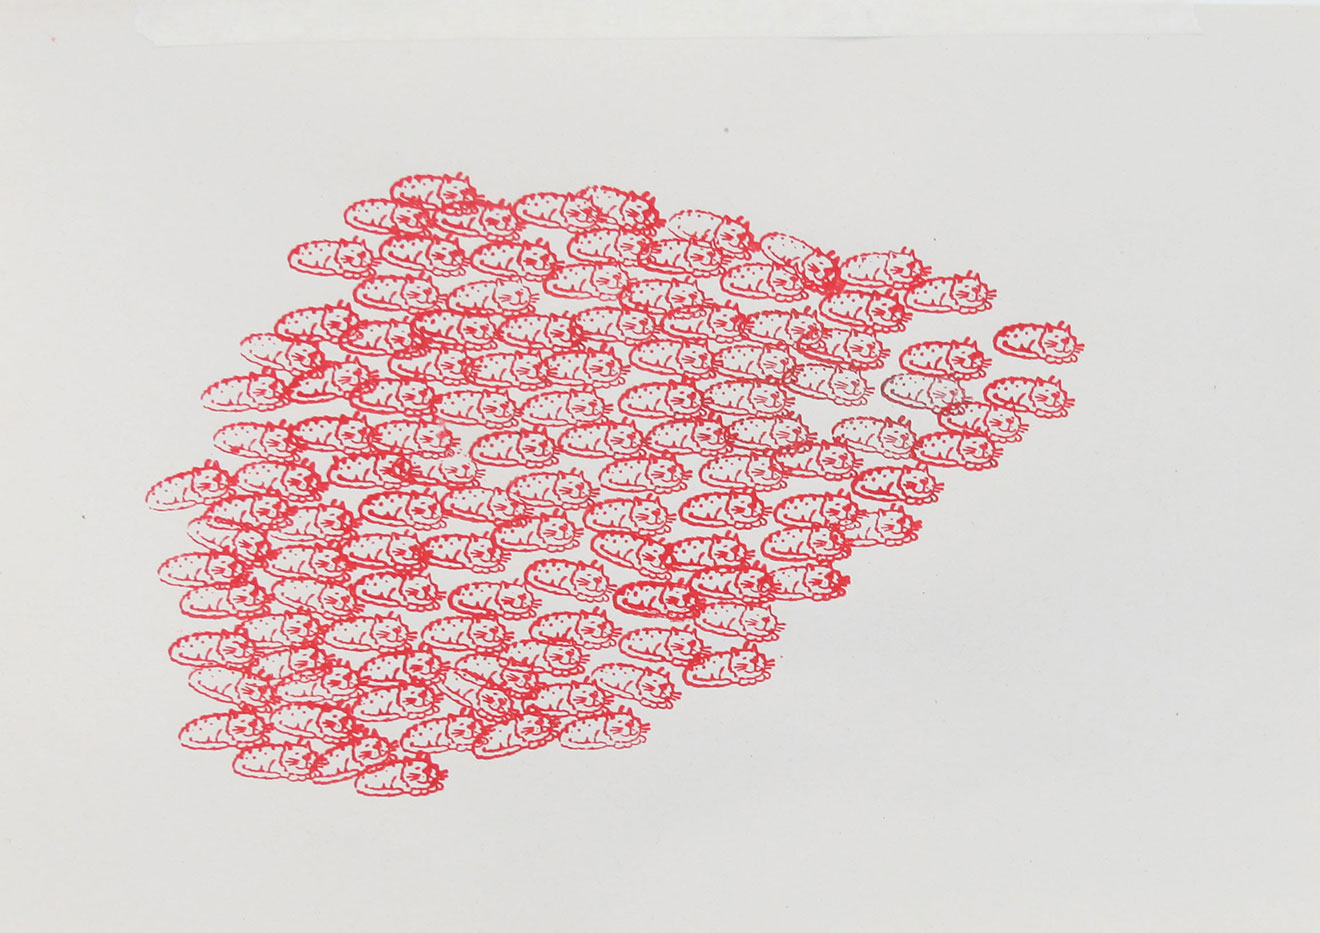 Elsbeth Ciesluk. Catswarm, 2015, ink on paper, 54,5 x 94 cm